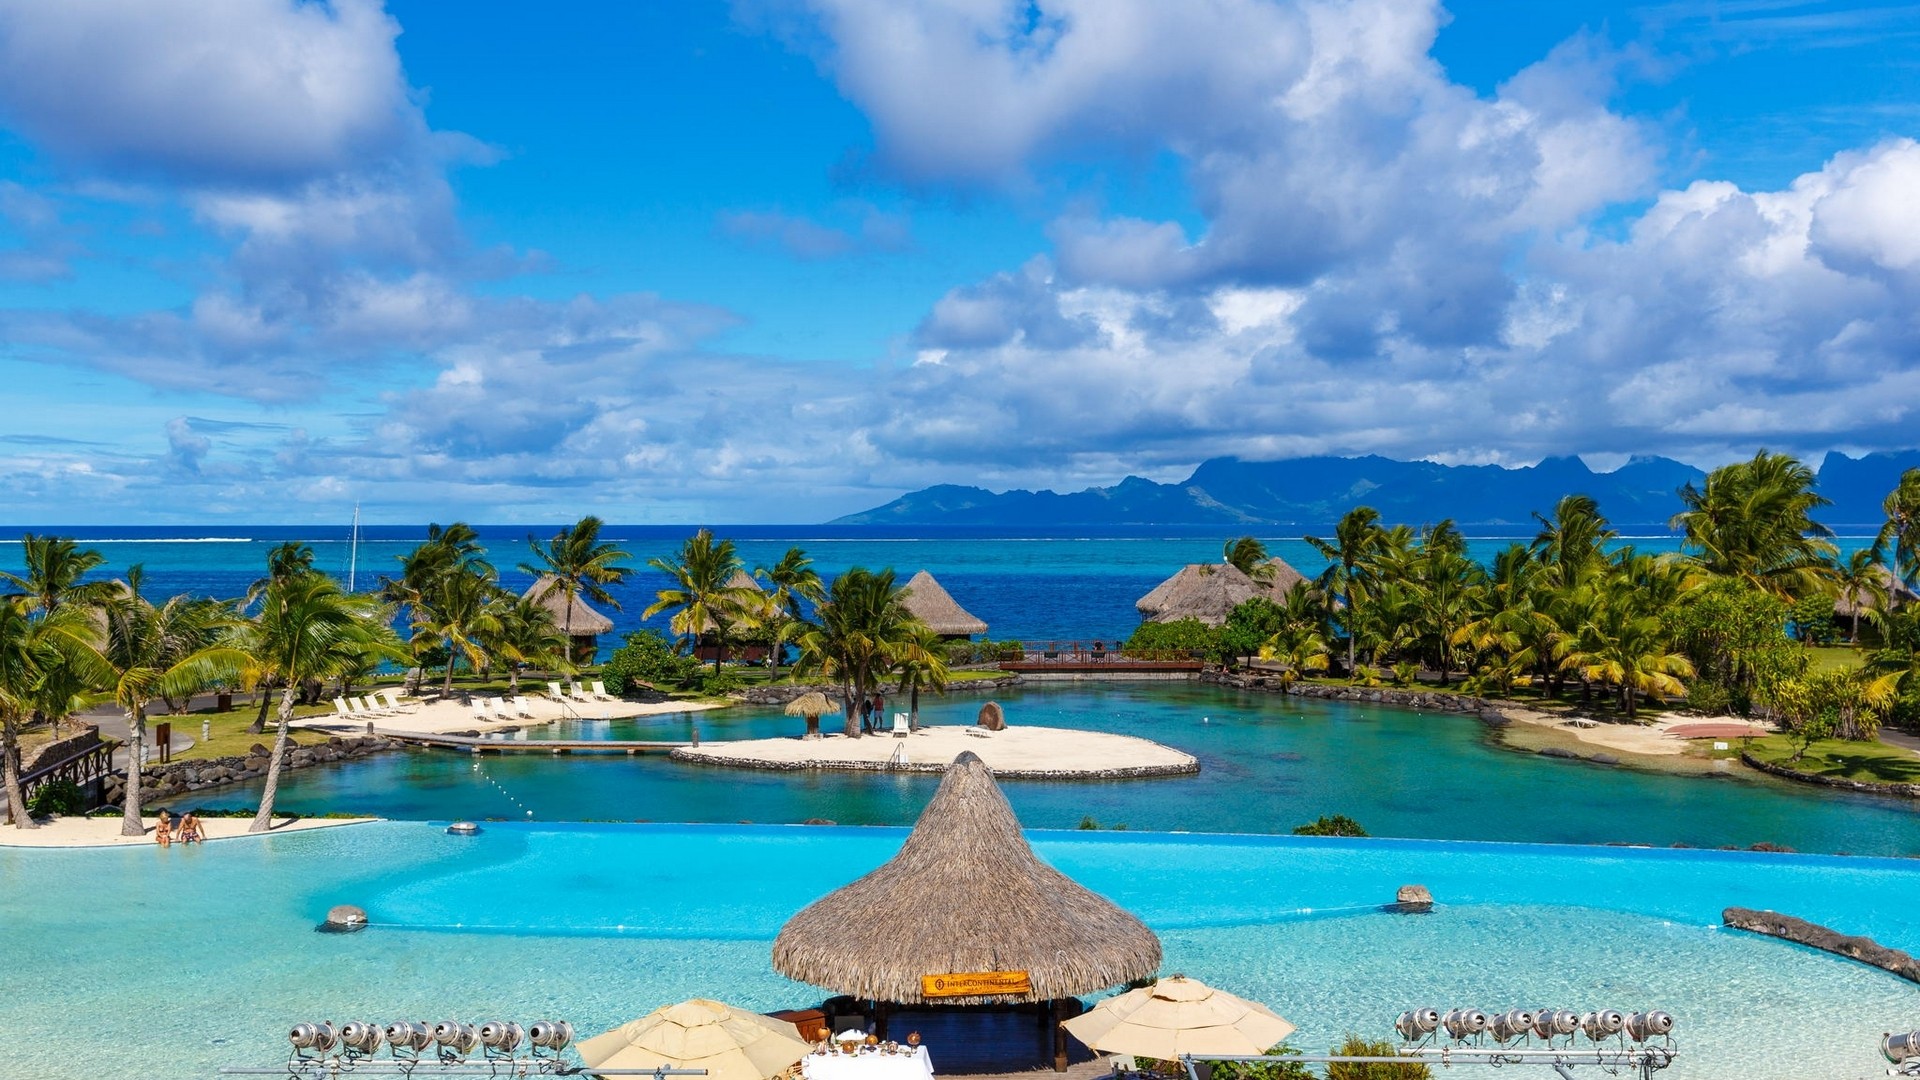 General 1920x1080 tropical resort Tahiti French Polynesia sea beach swimming pool palm trees island mountains clouds summer